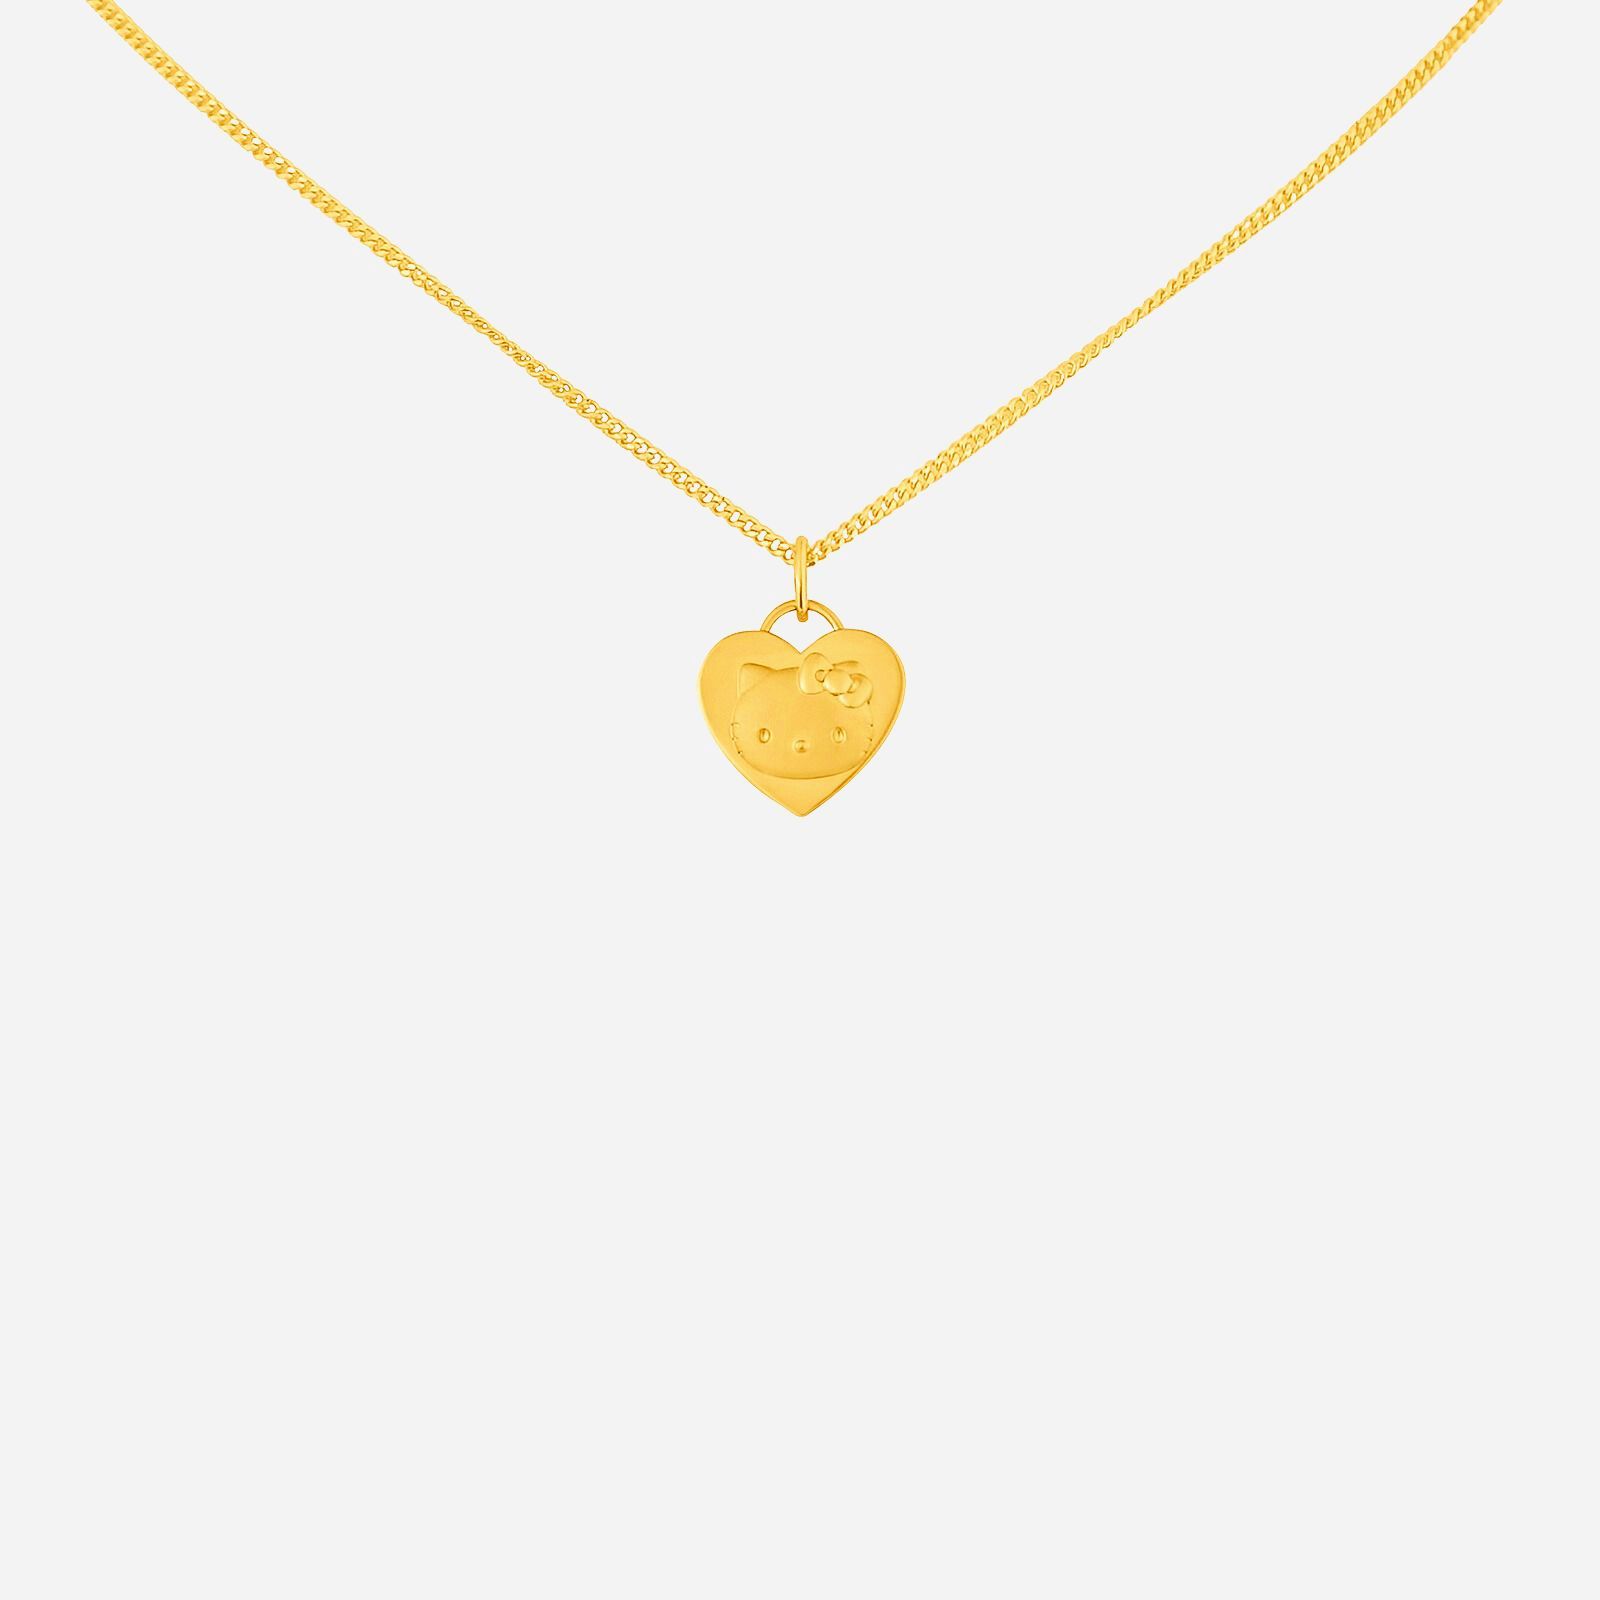 Poh Heng Hello Kitty Heart Pendant in 22K Yellow Gold	